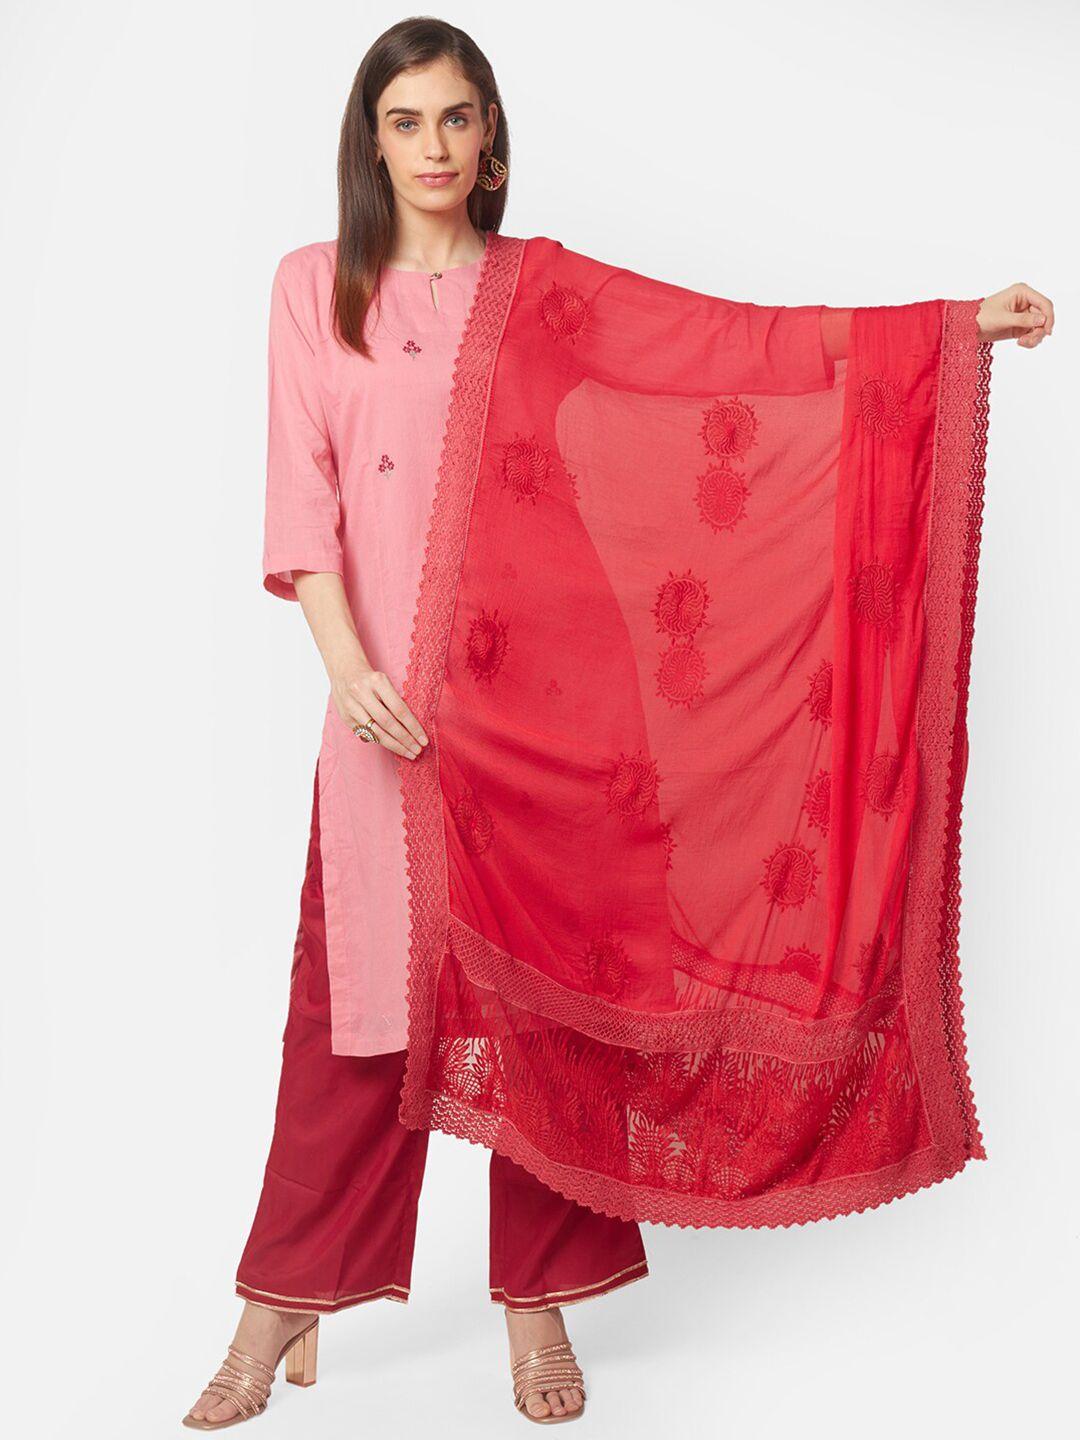 dupatta bazaar red ethnic motifs embroidered pure chiffon dupatta